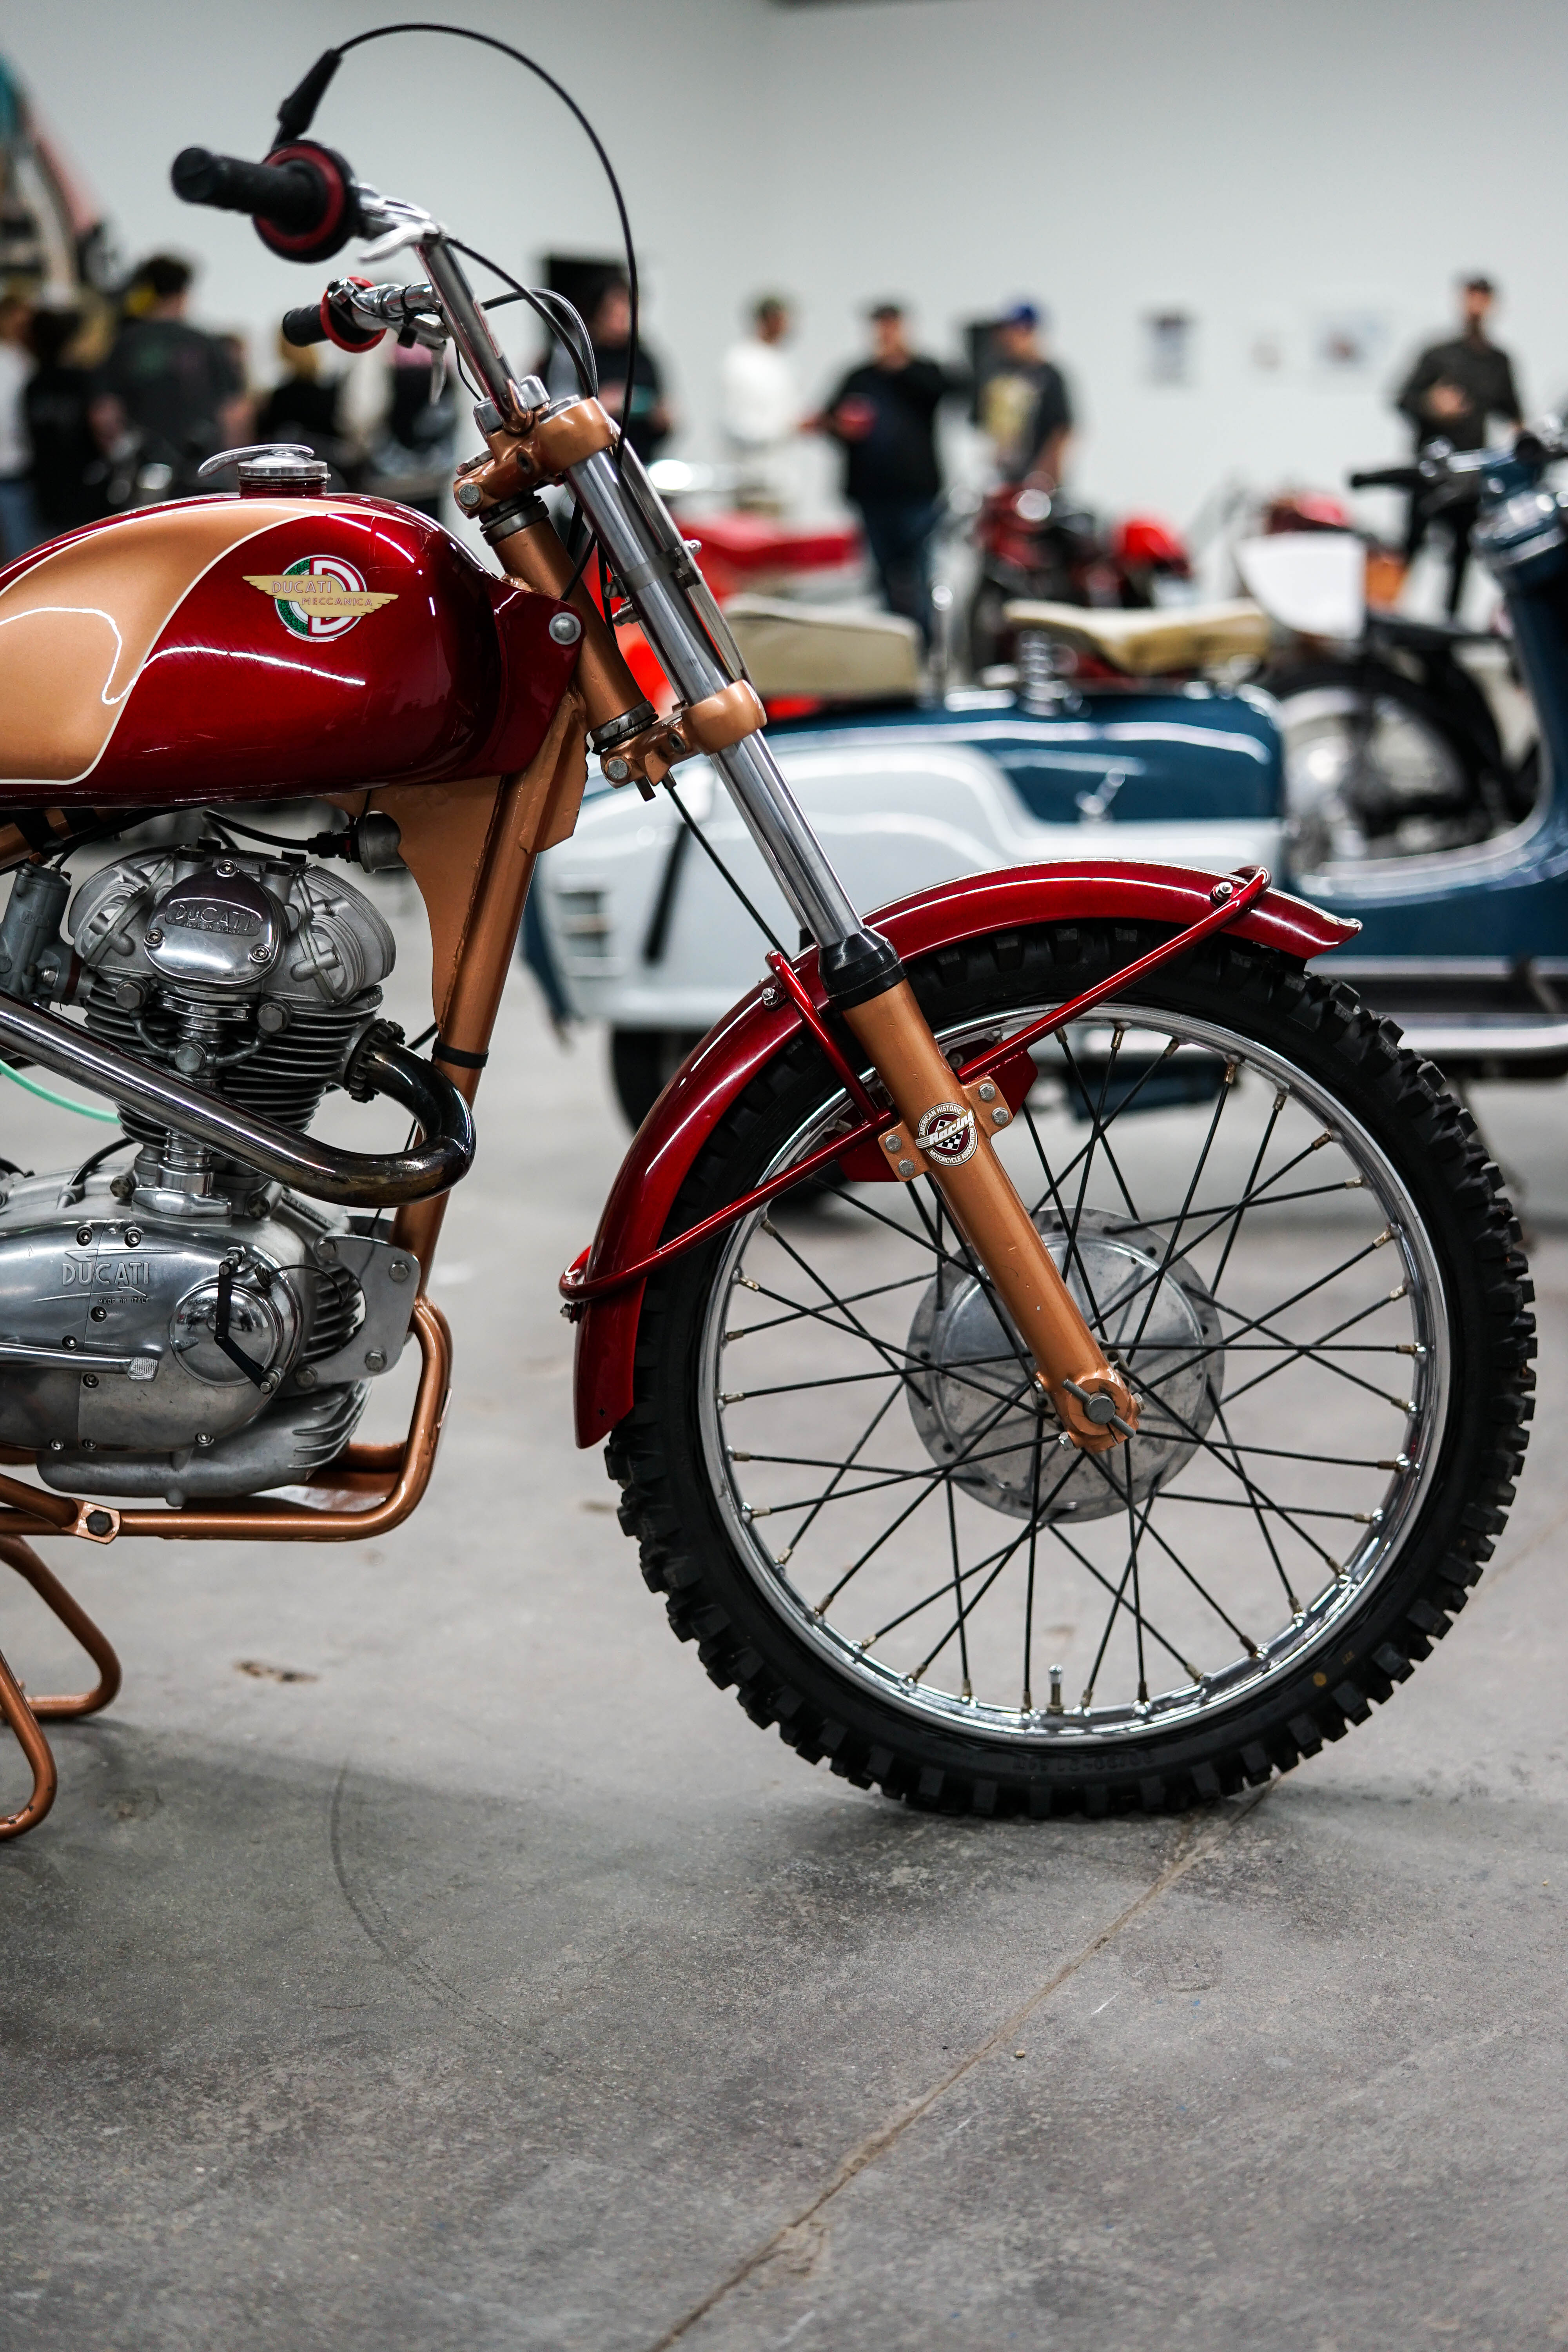 1967 Ducati Scrambler OG Moto Show